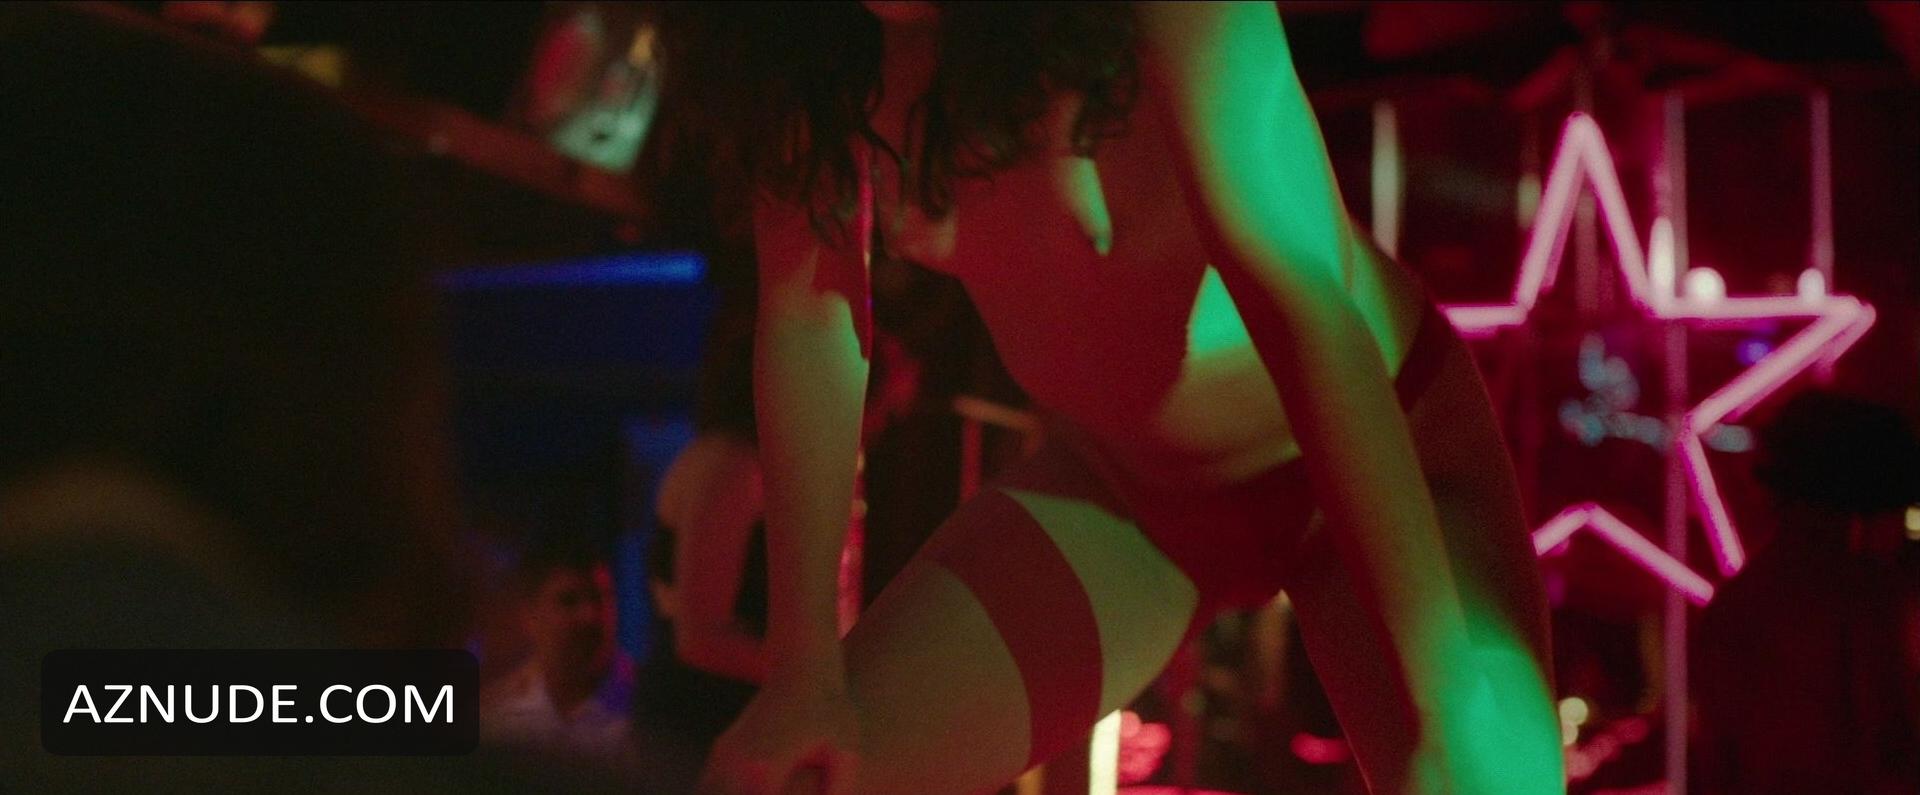 Dallas Buyers Club Nude Scenes Aznude